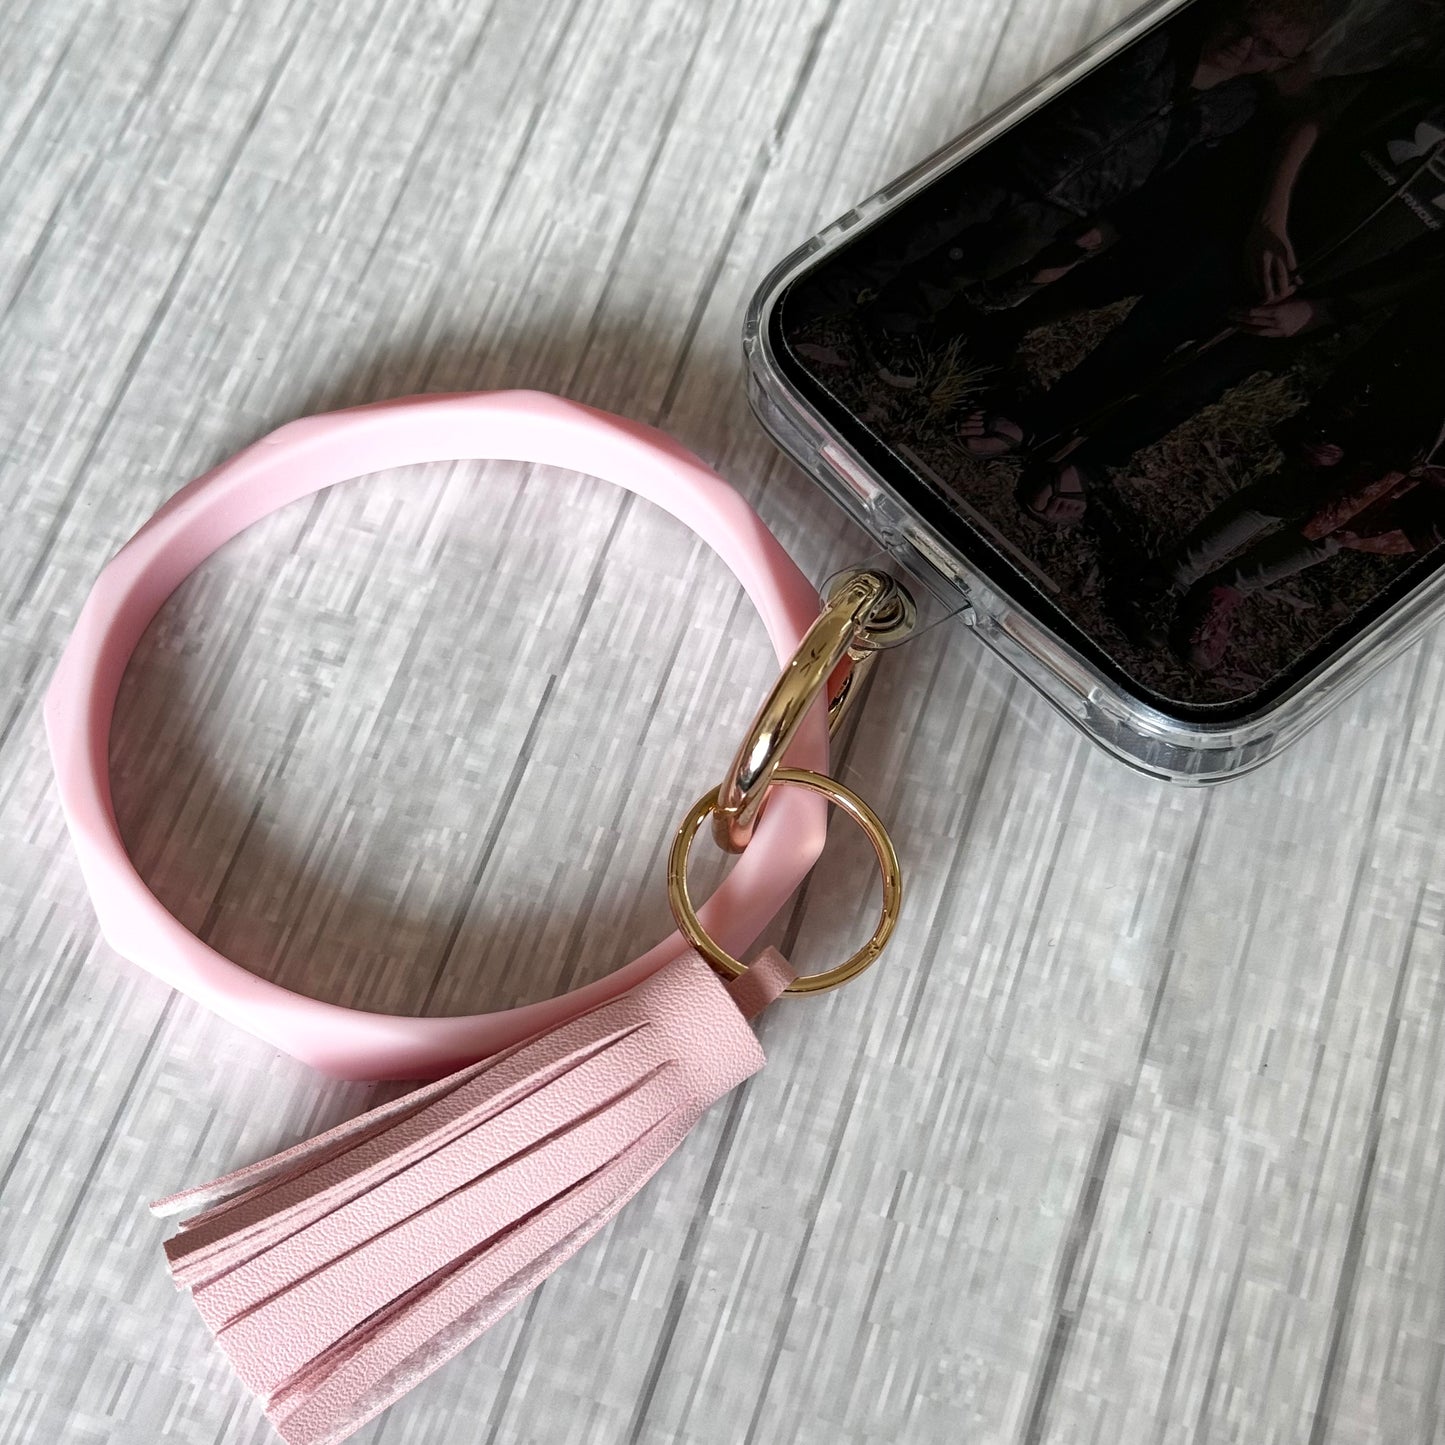 Phone Bracelet Keychain with Tether Tab - BLUSH